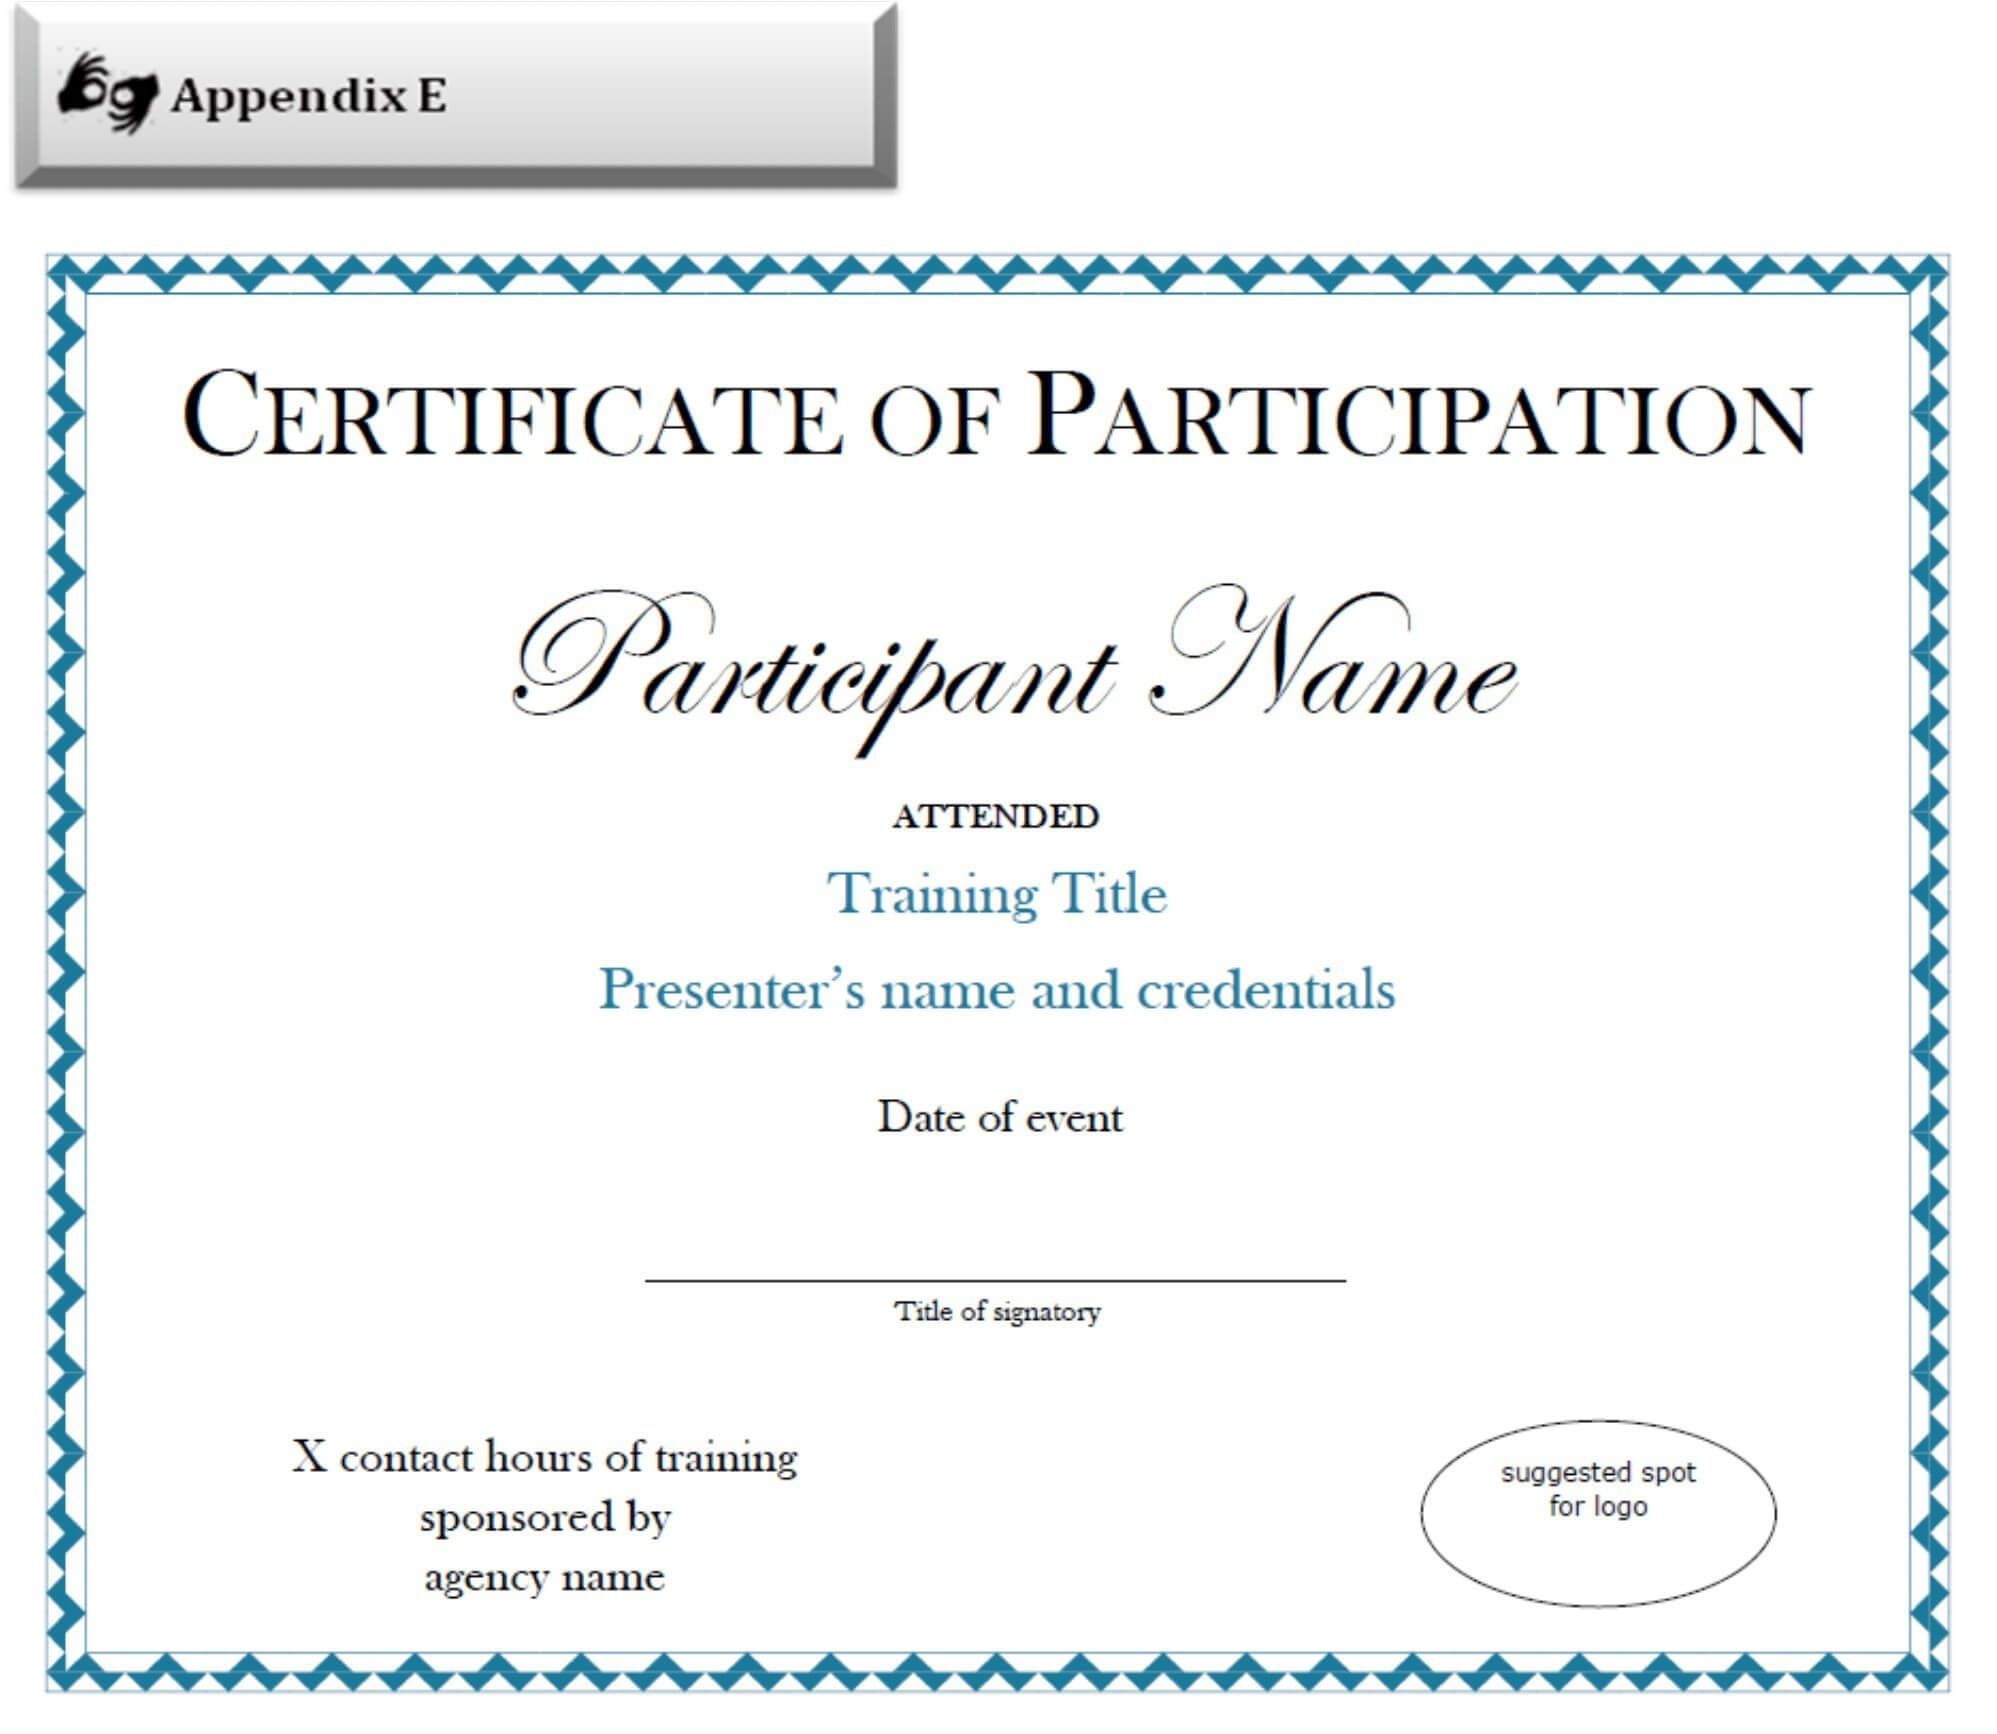 Brilliant Ideas For Conference Participation Certificate In Conference Participation Certificate Template